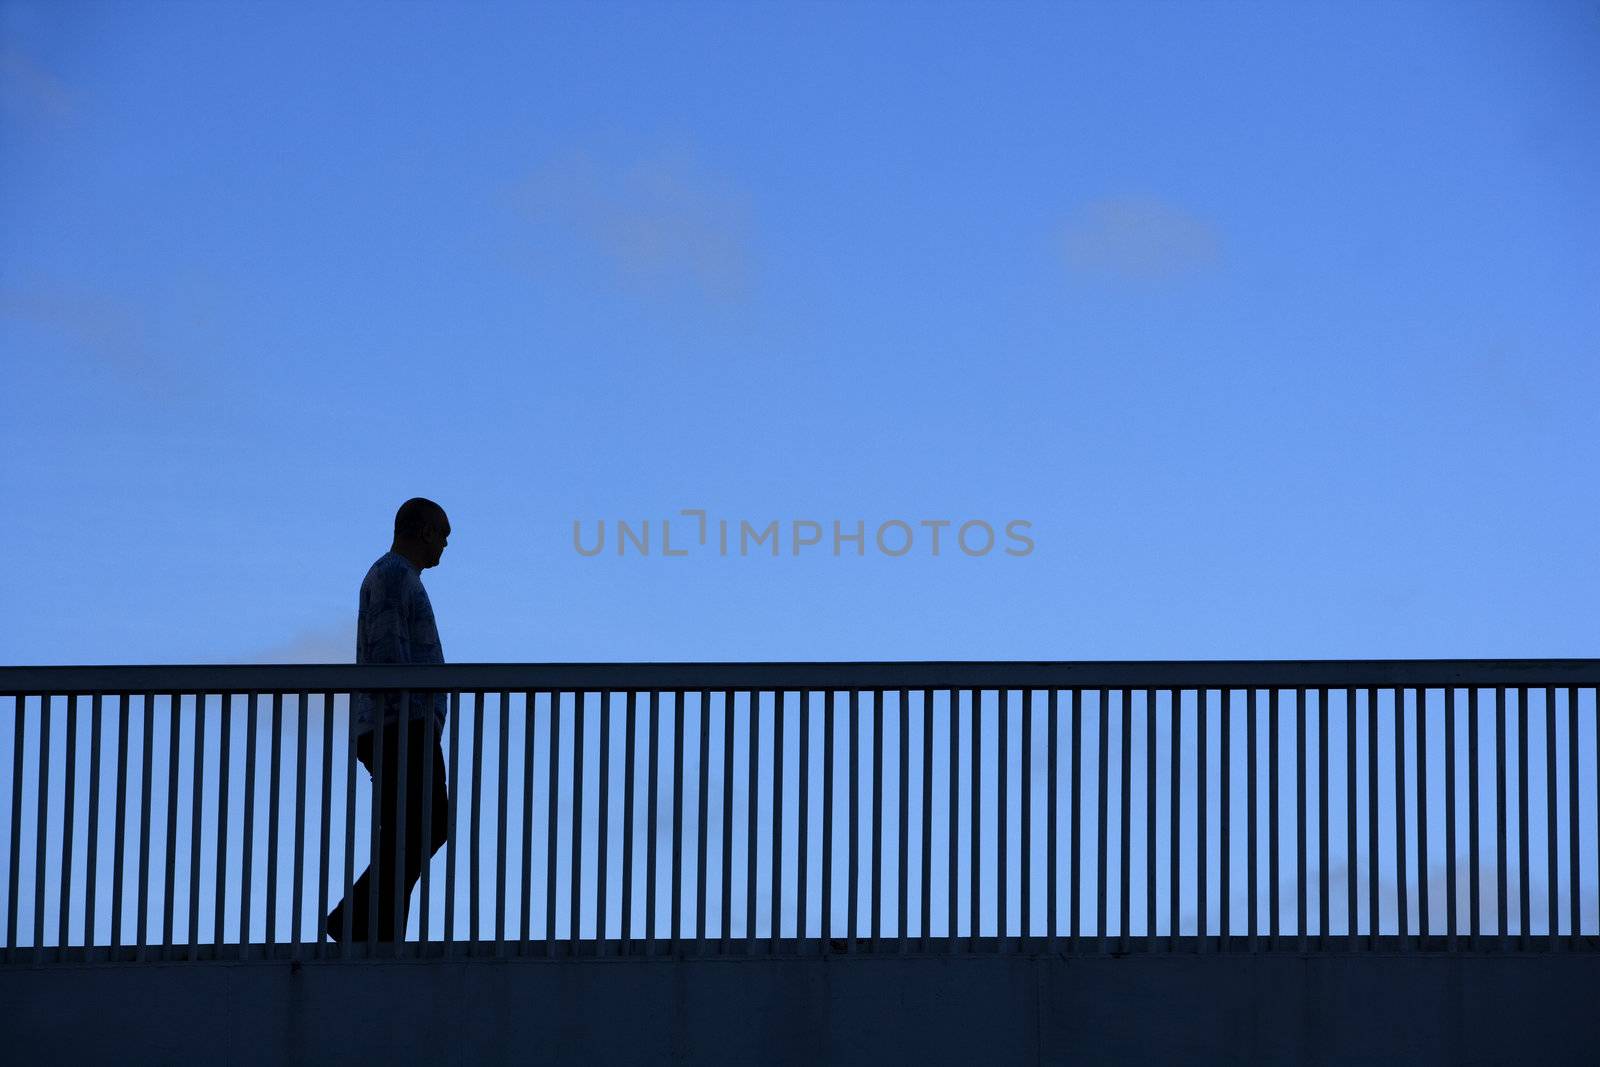 Silhouette of a walking man on a bridge